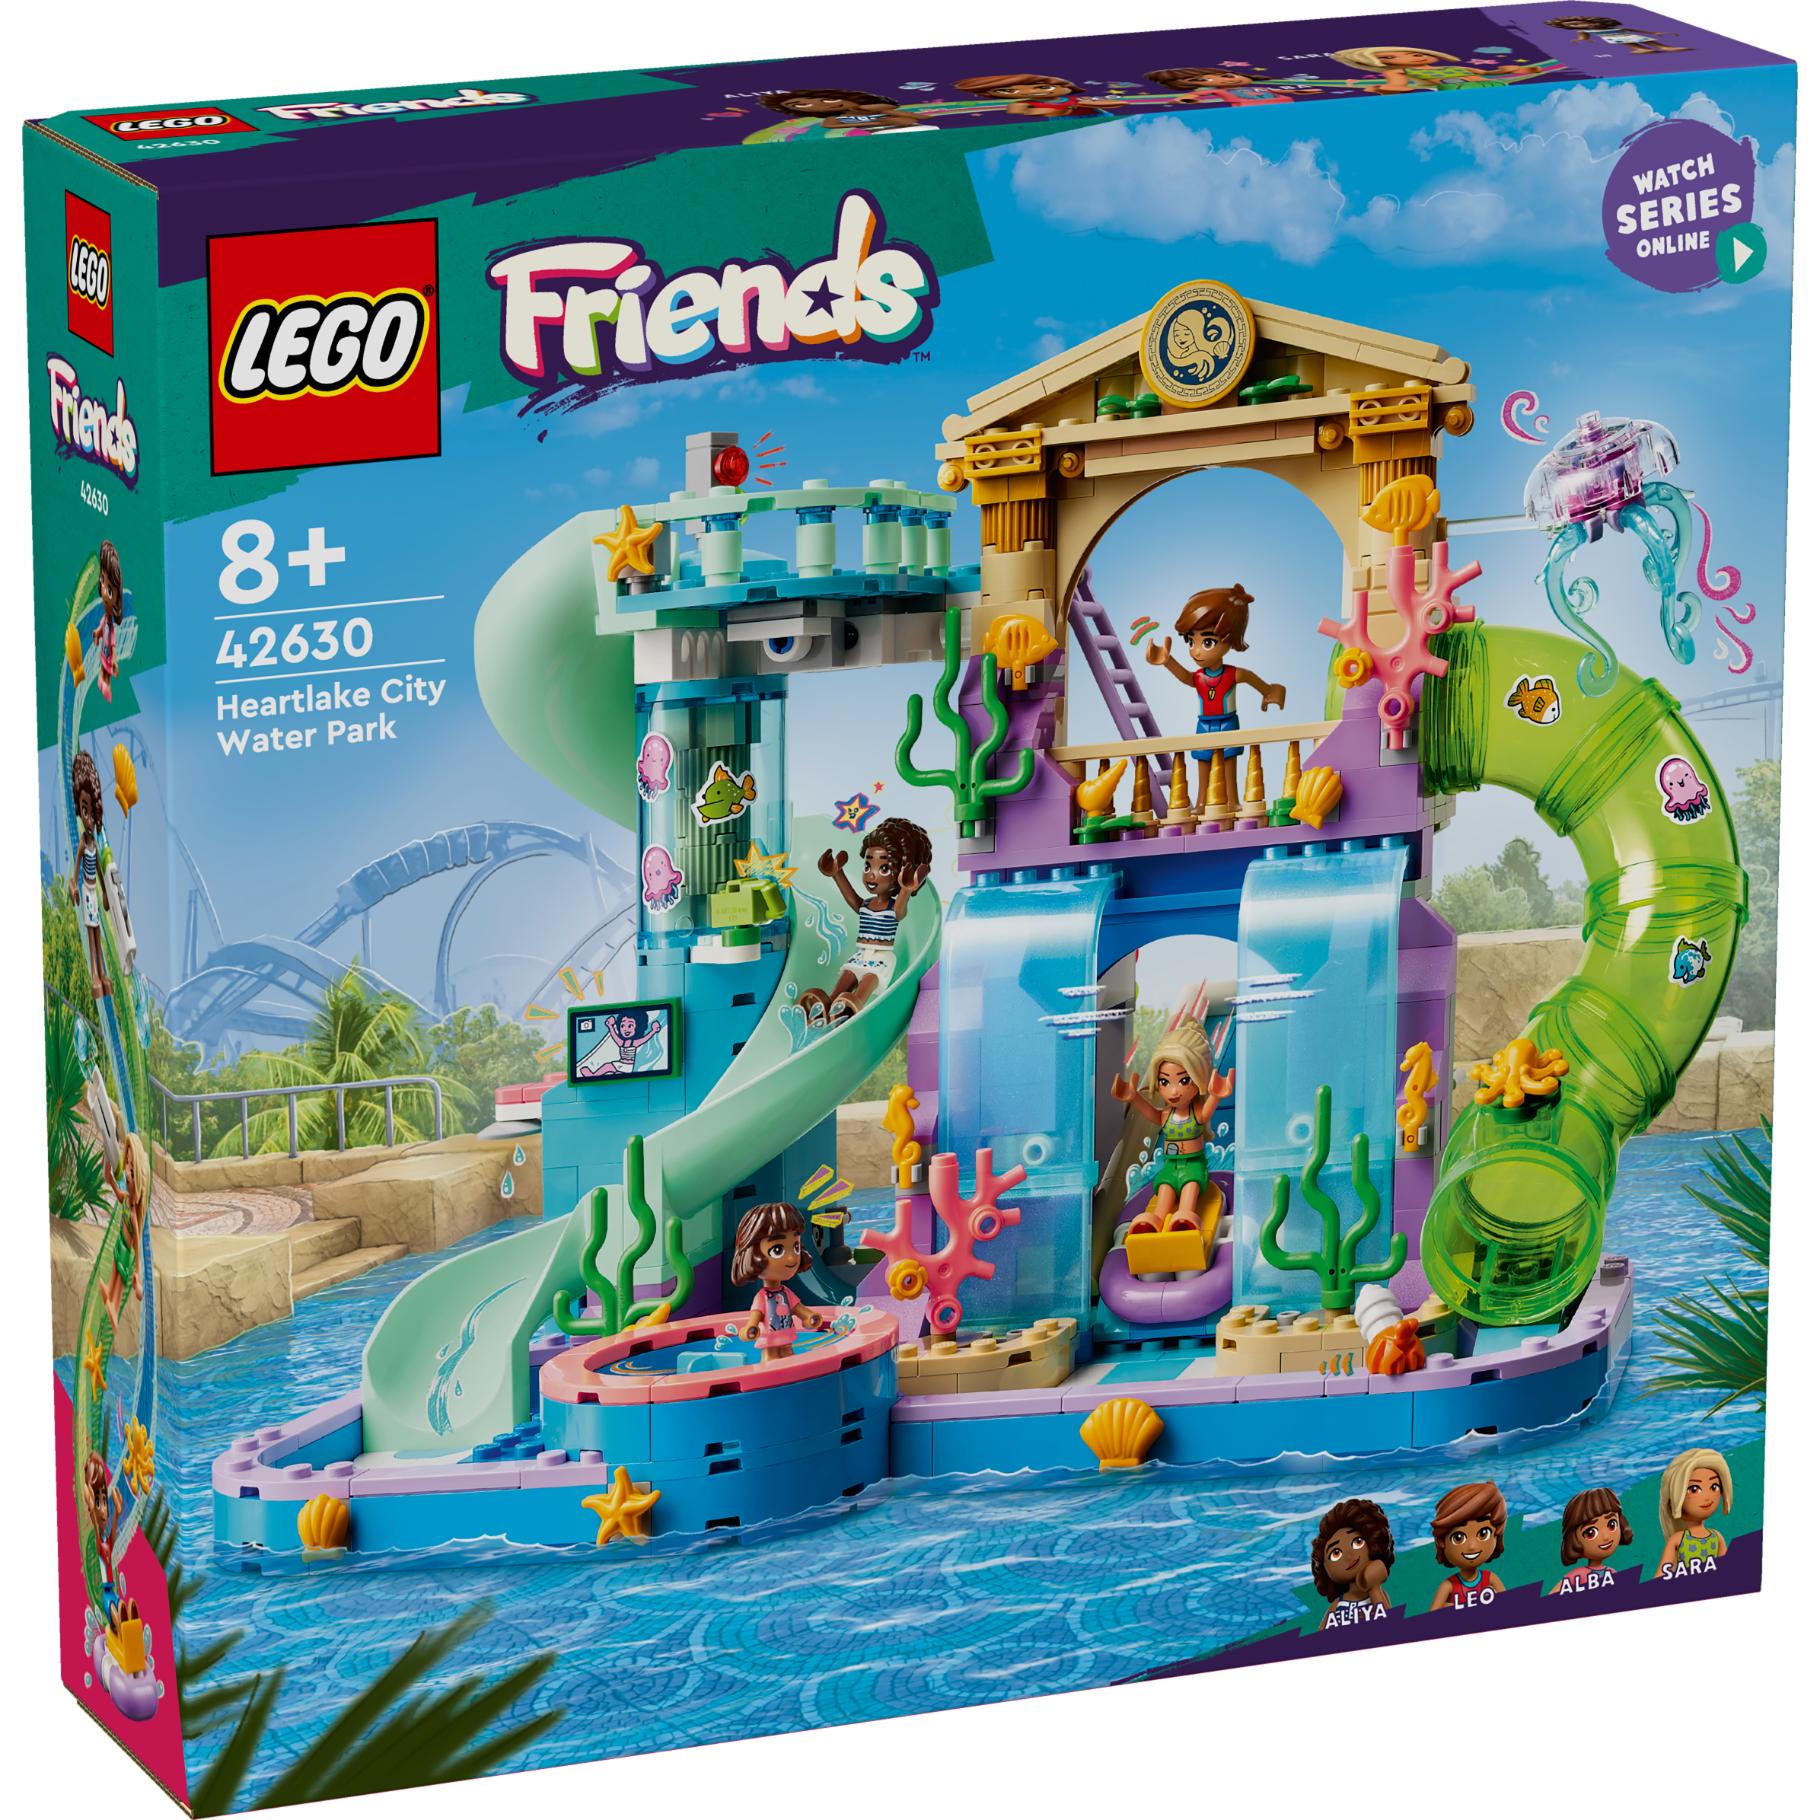 Top1Toys LEGO 42630 Friends Heartlake City Waterpark